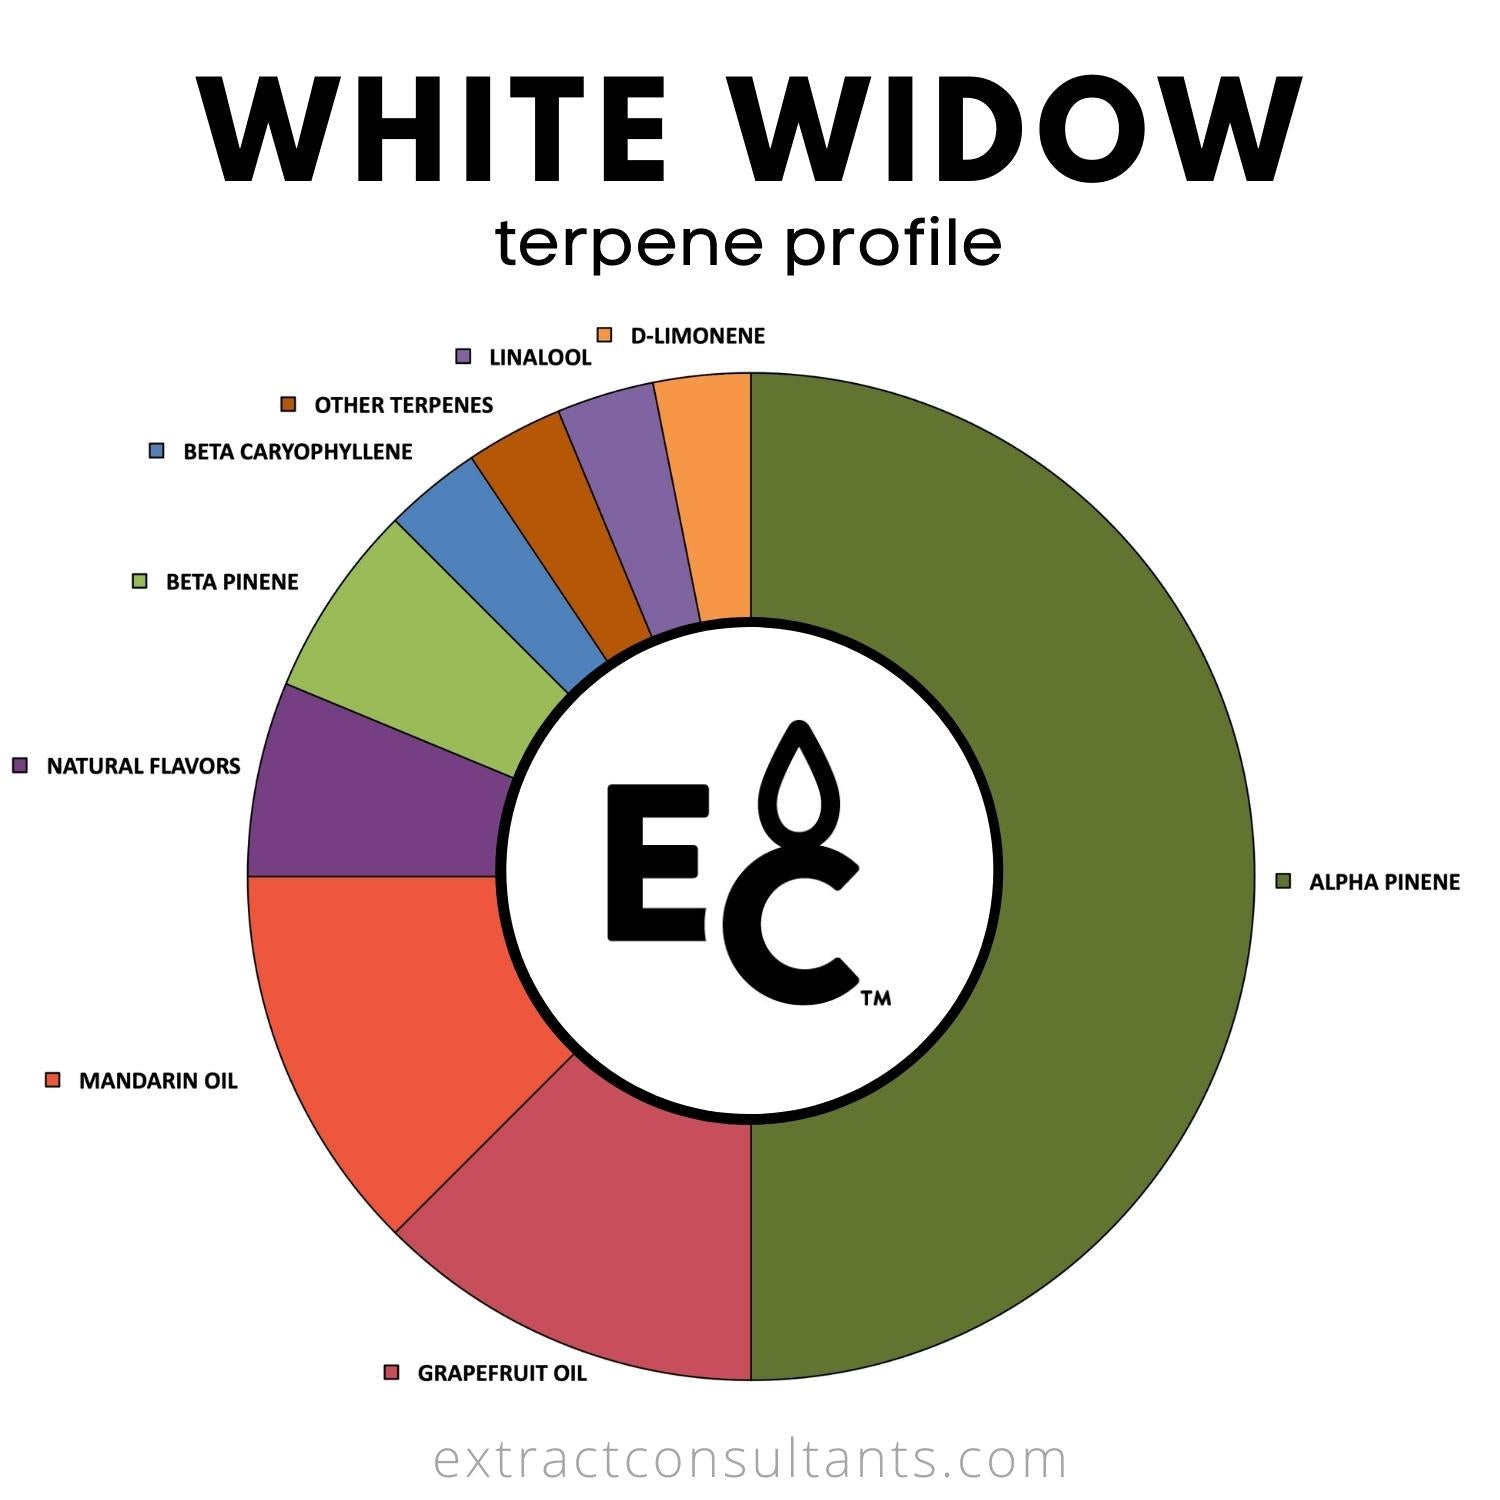 white widow terpene profile chart